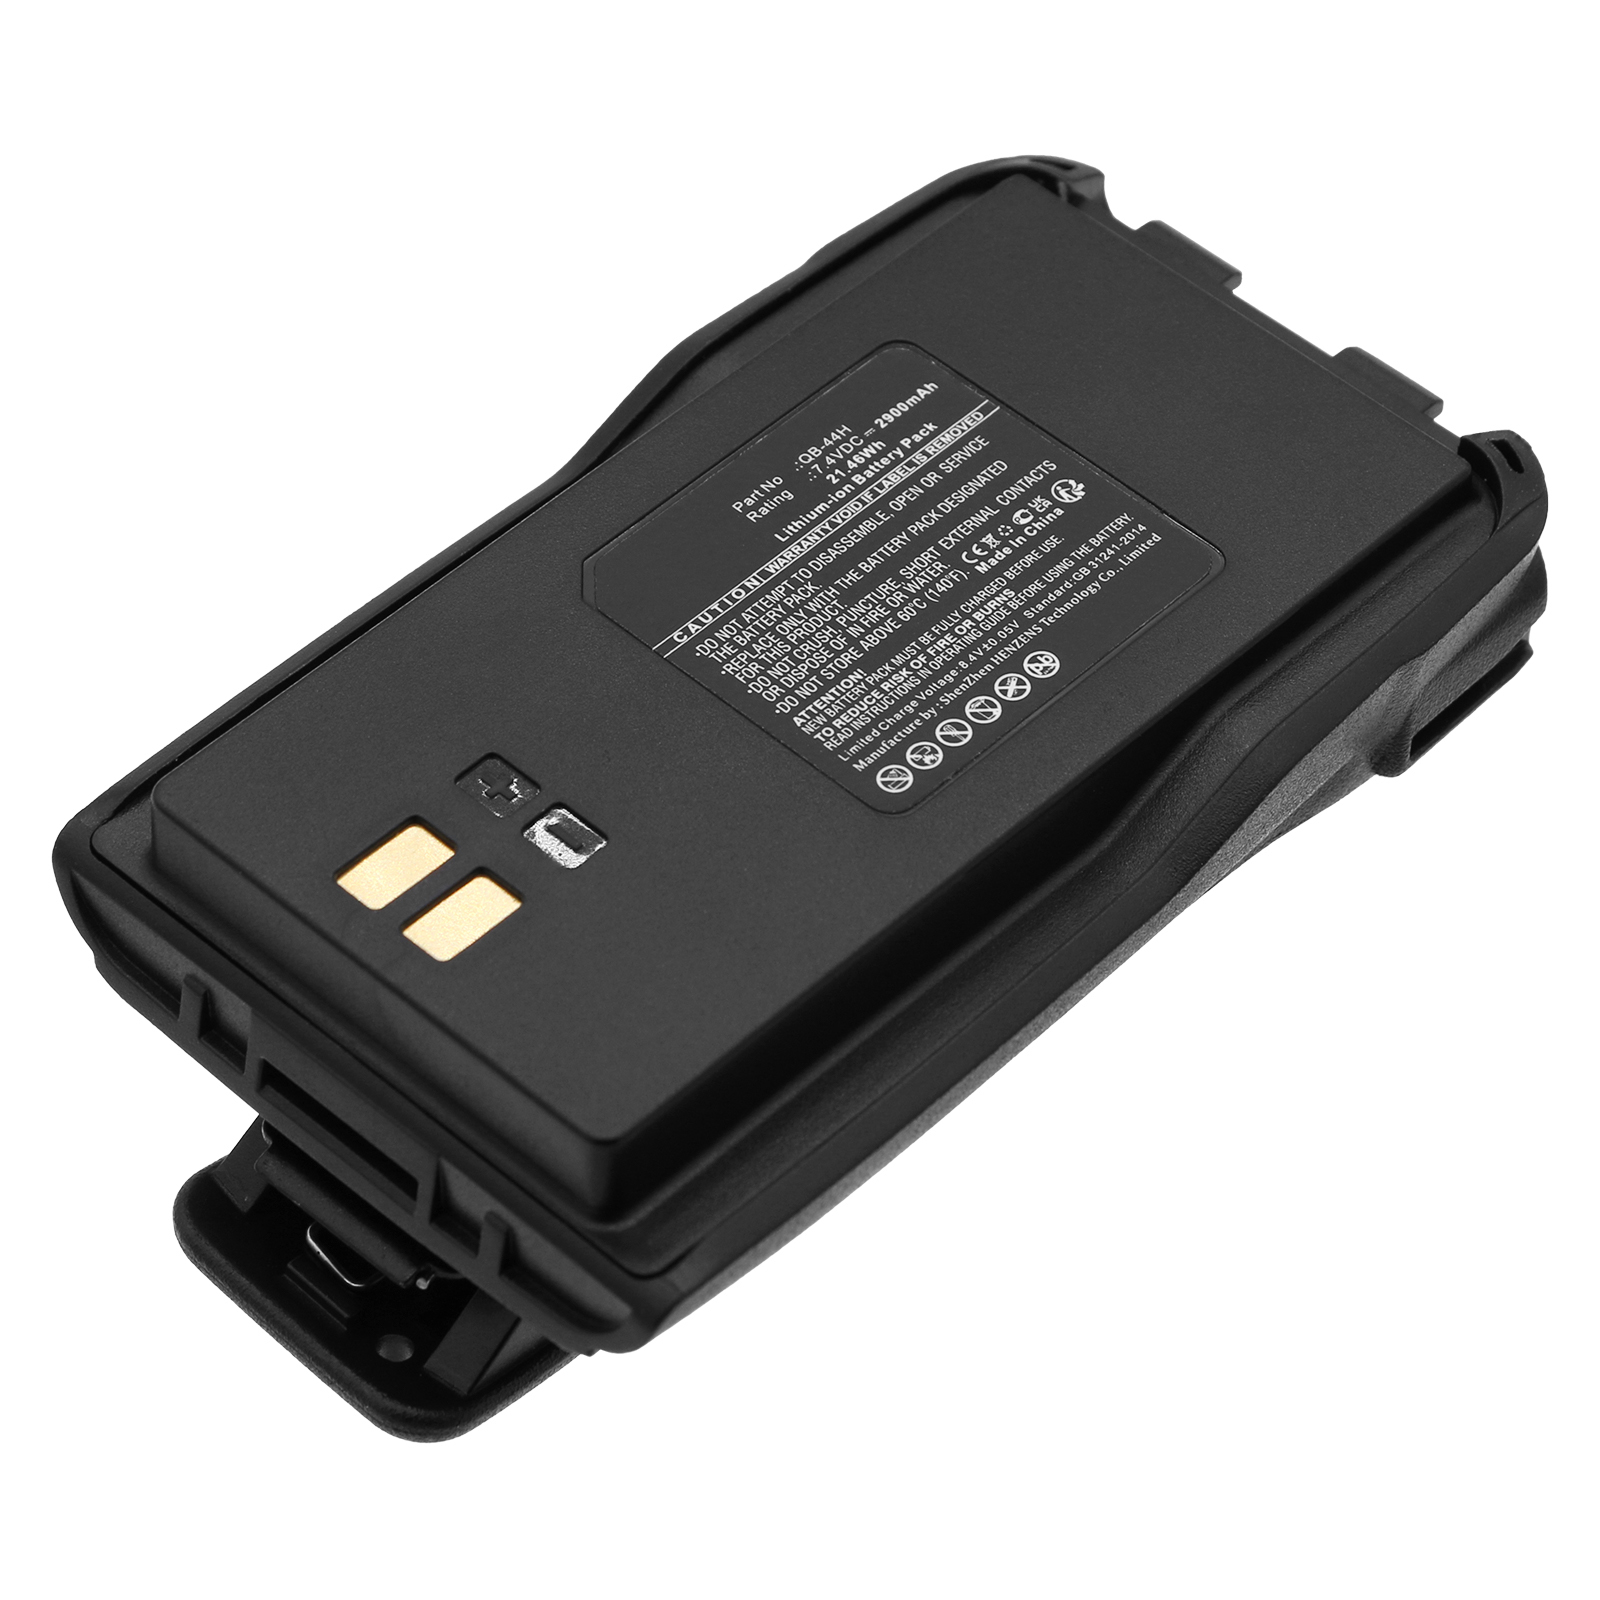 Synergy Digital 2-Way Radio Battery, Compatible with AnyTone QB-44H 2-Way Radio Battery (Li-ion, 7.4V, 2900mAh)